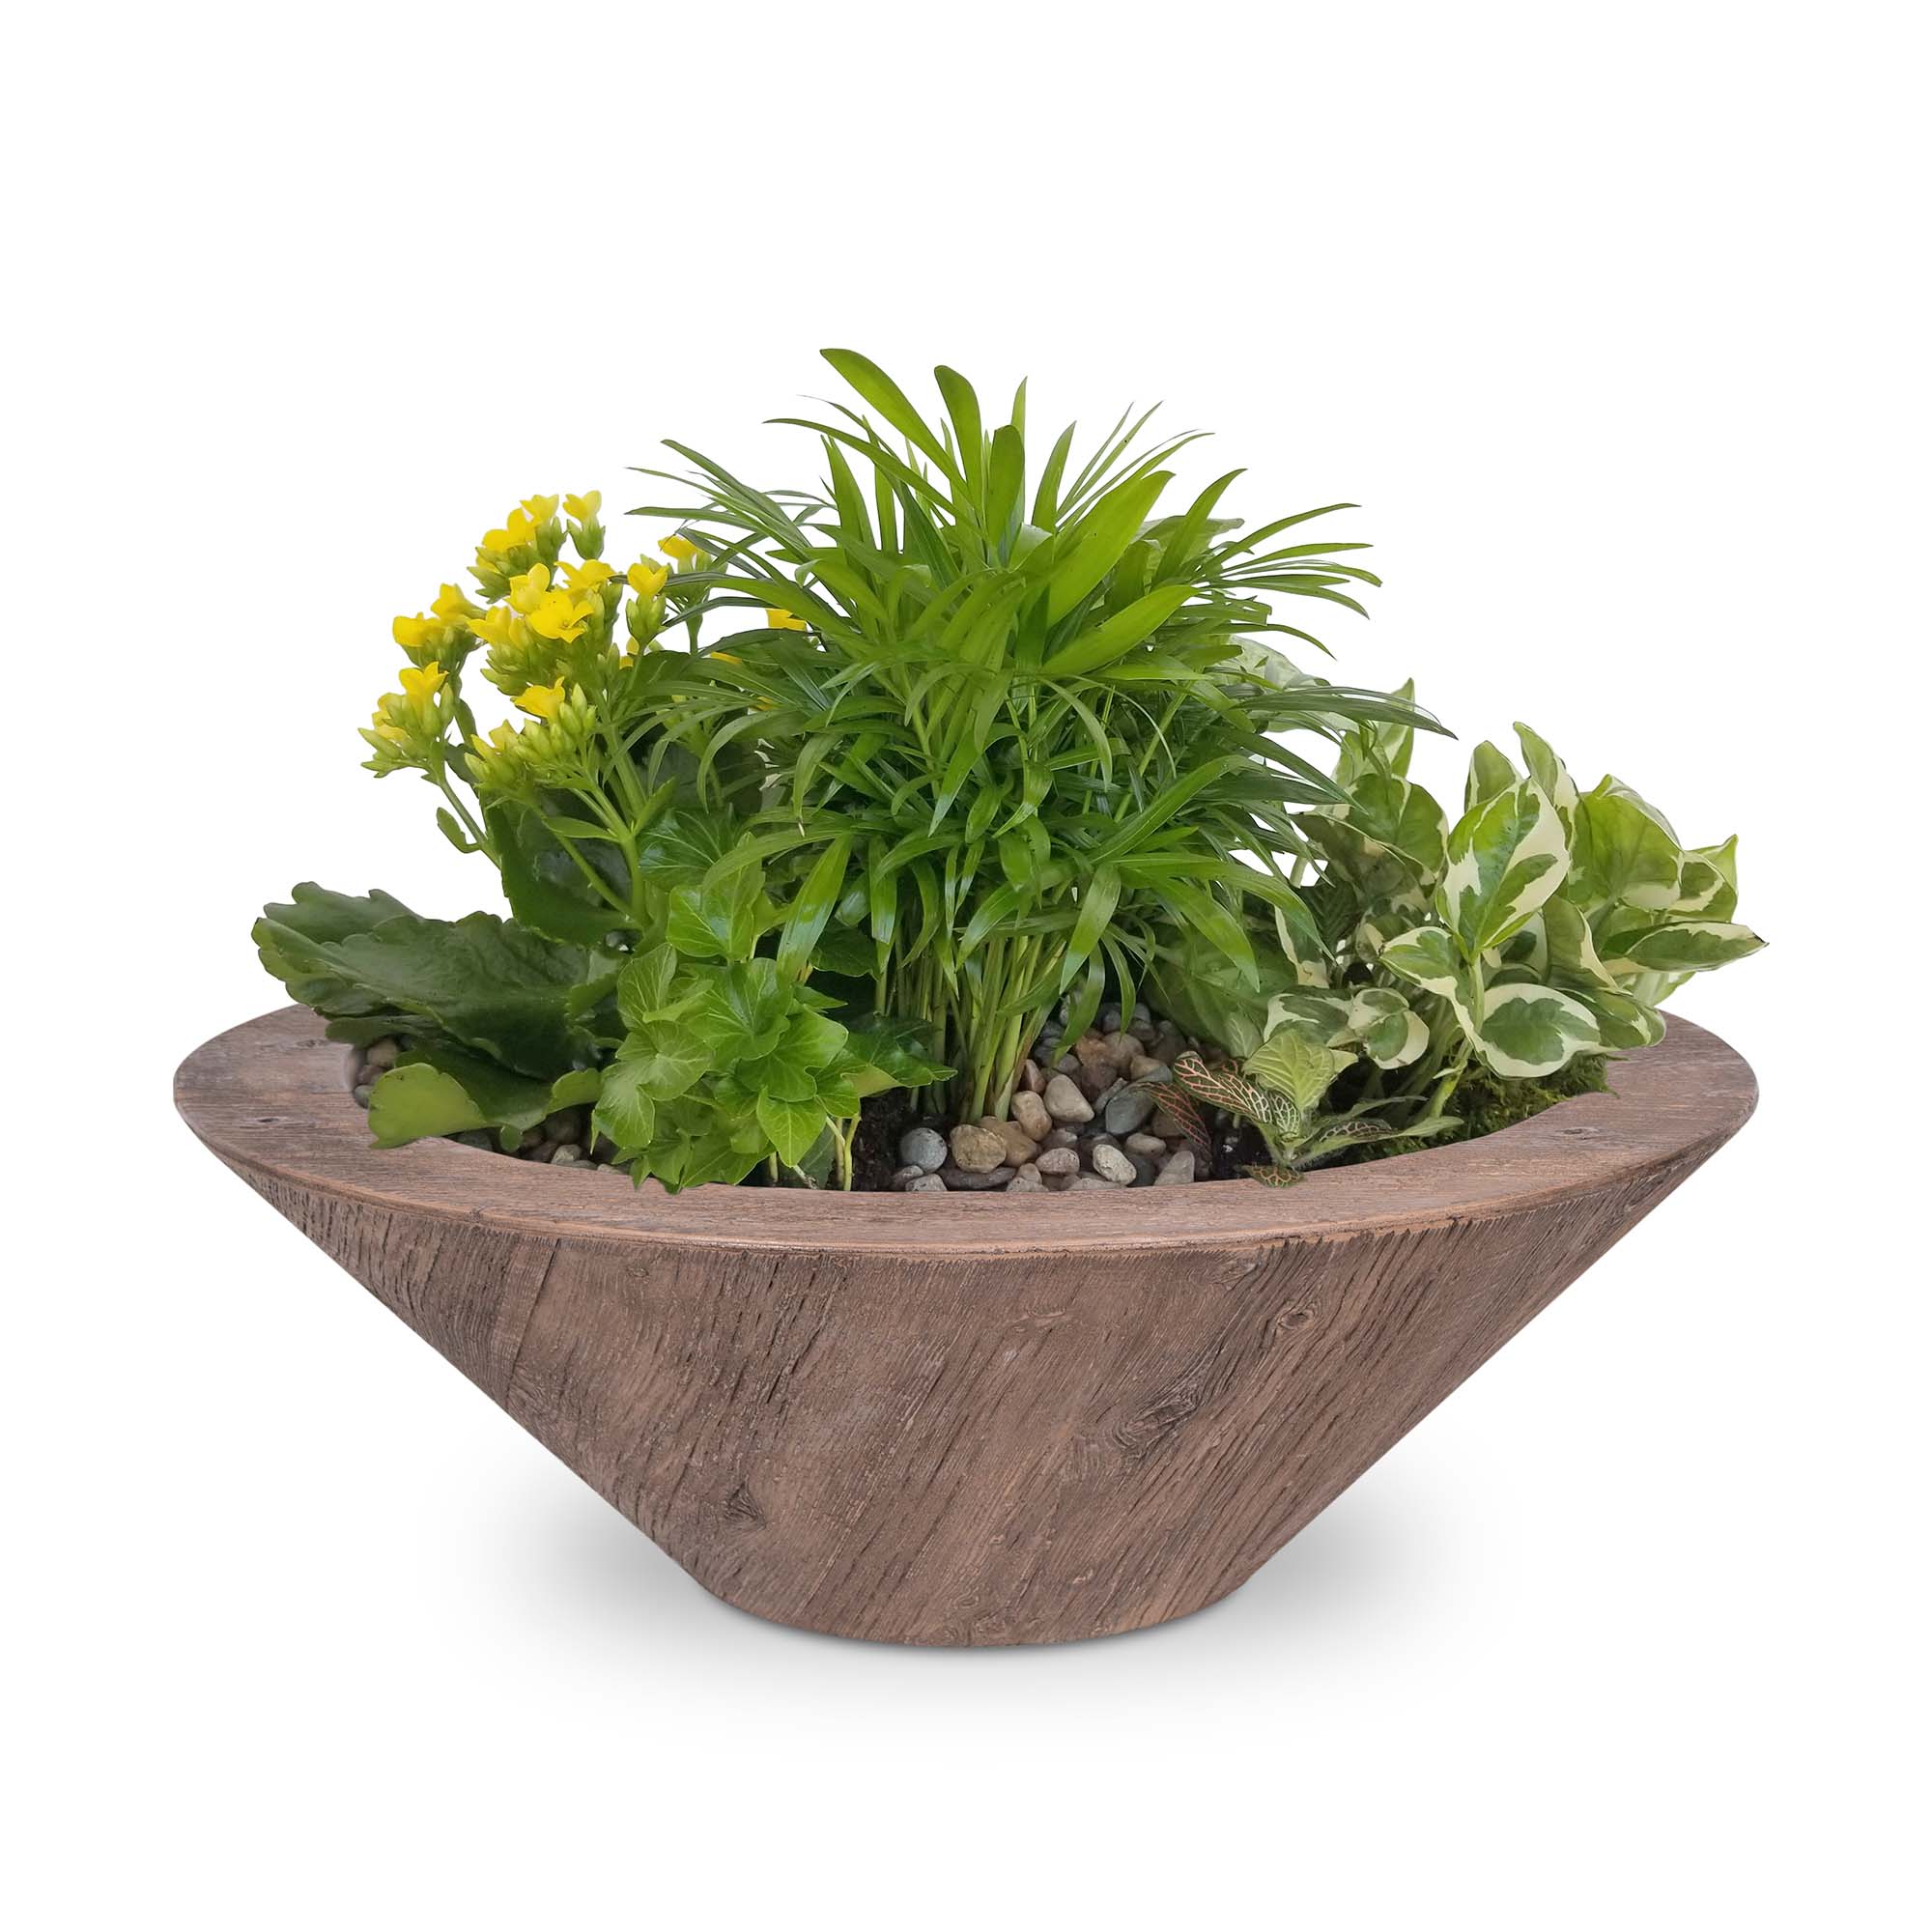 The Outdoor Plus Cazo Wood Grain Planter Bowl